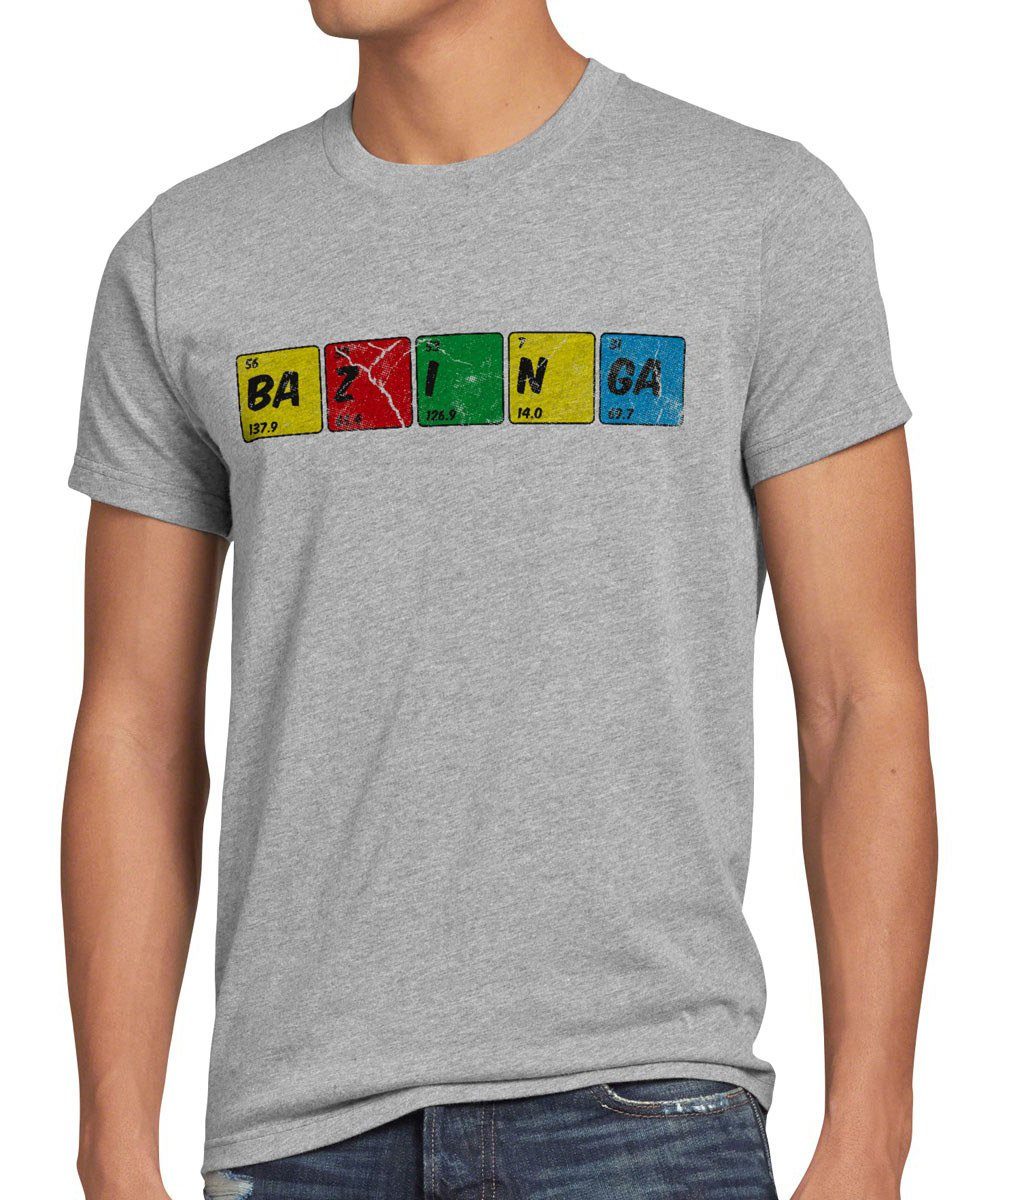 style3 Print-Shirt cooper theory bazinga Herren grau chemie tbbt Periodensystem Sheldon big bang T-Shirt meliert